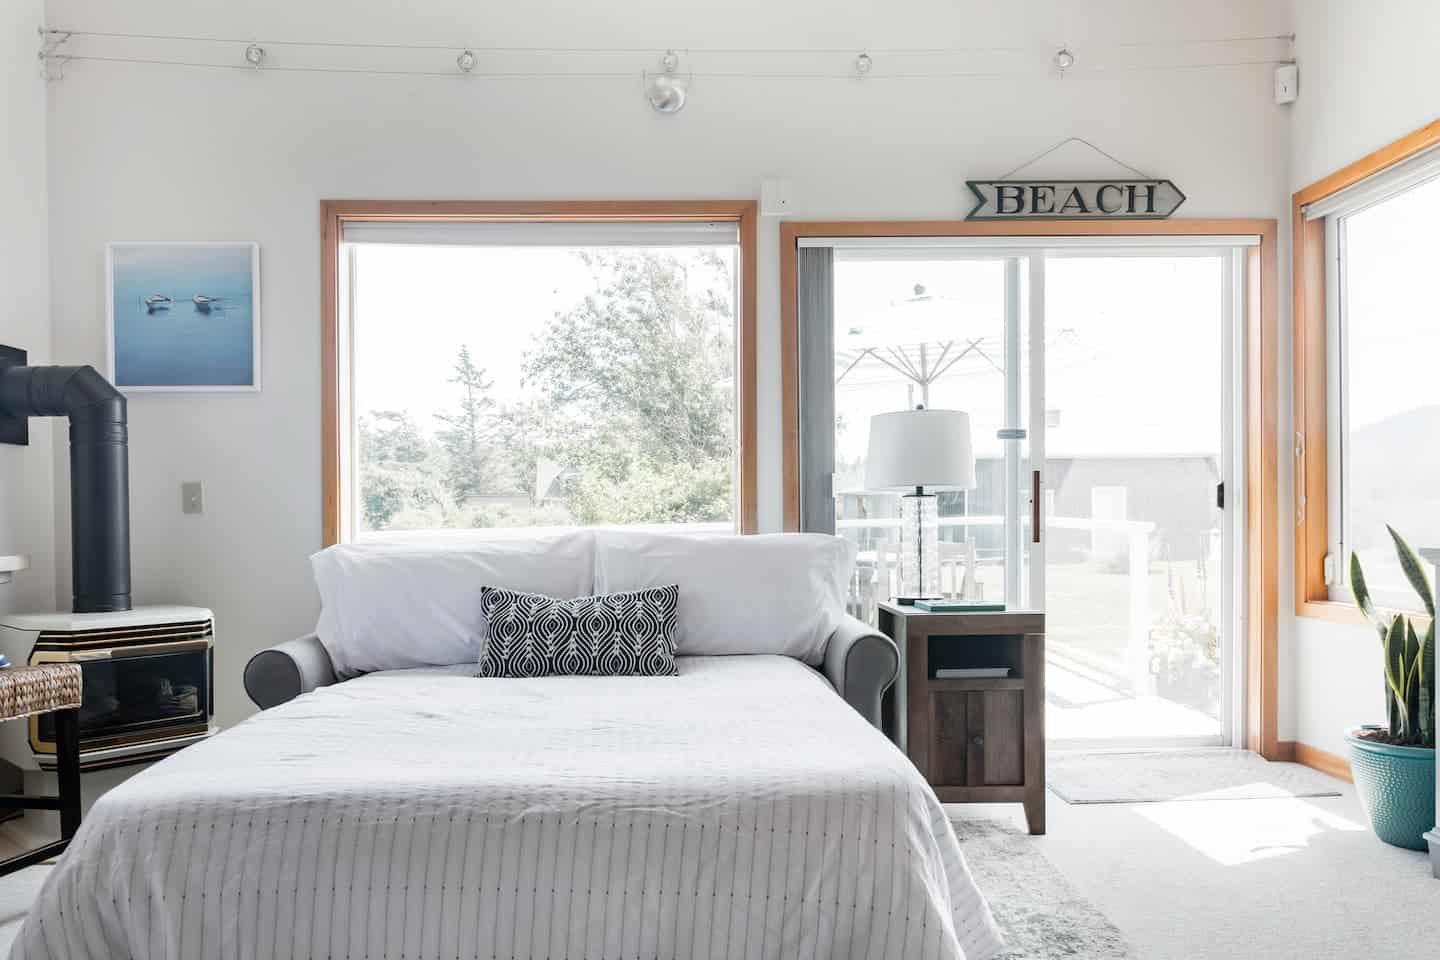 Image of Airbnb rental in Bellingham, Washington